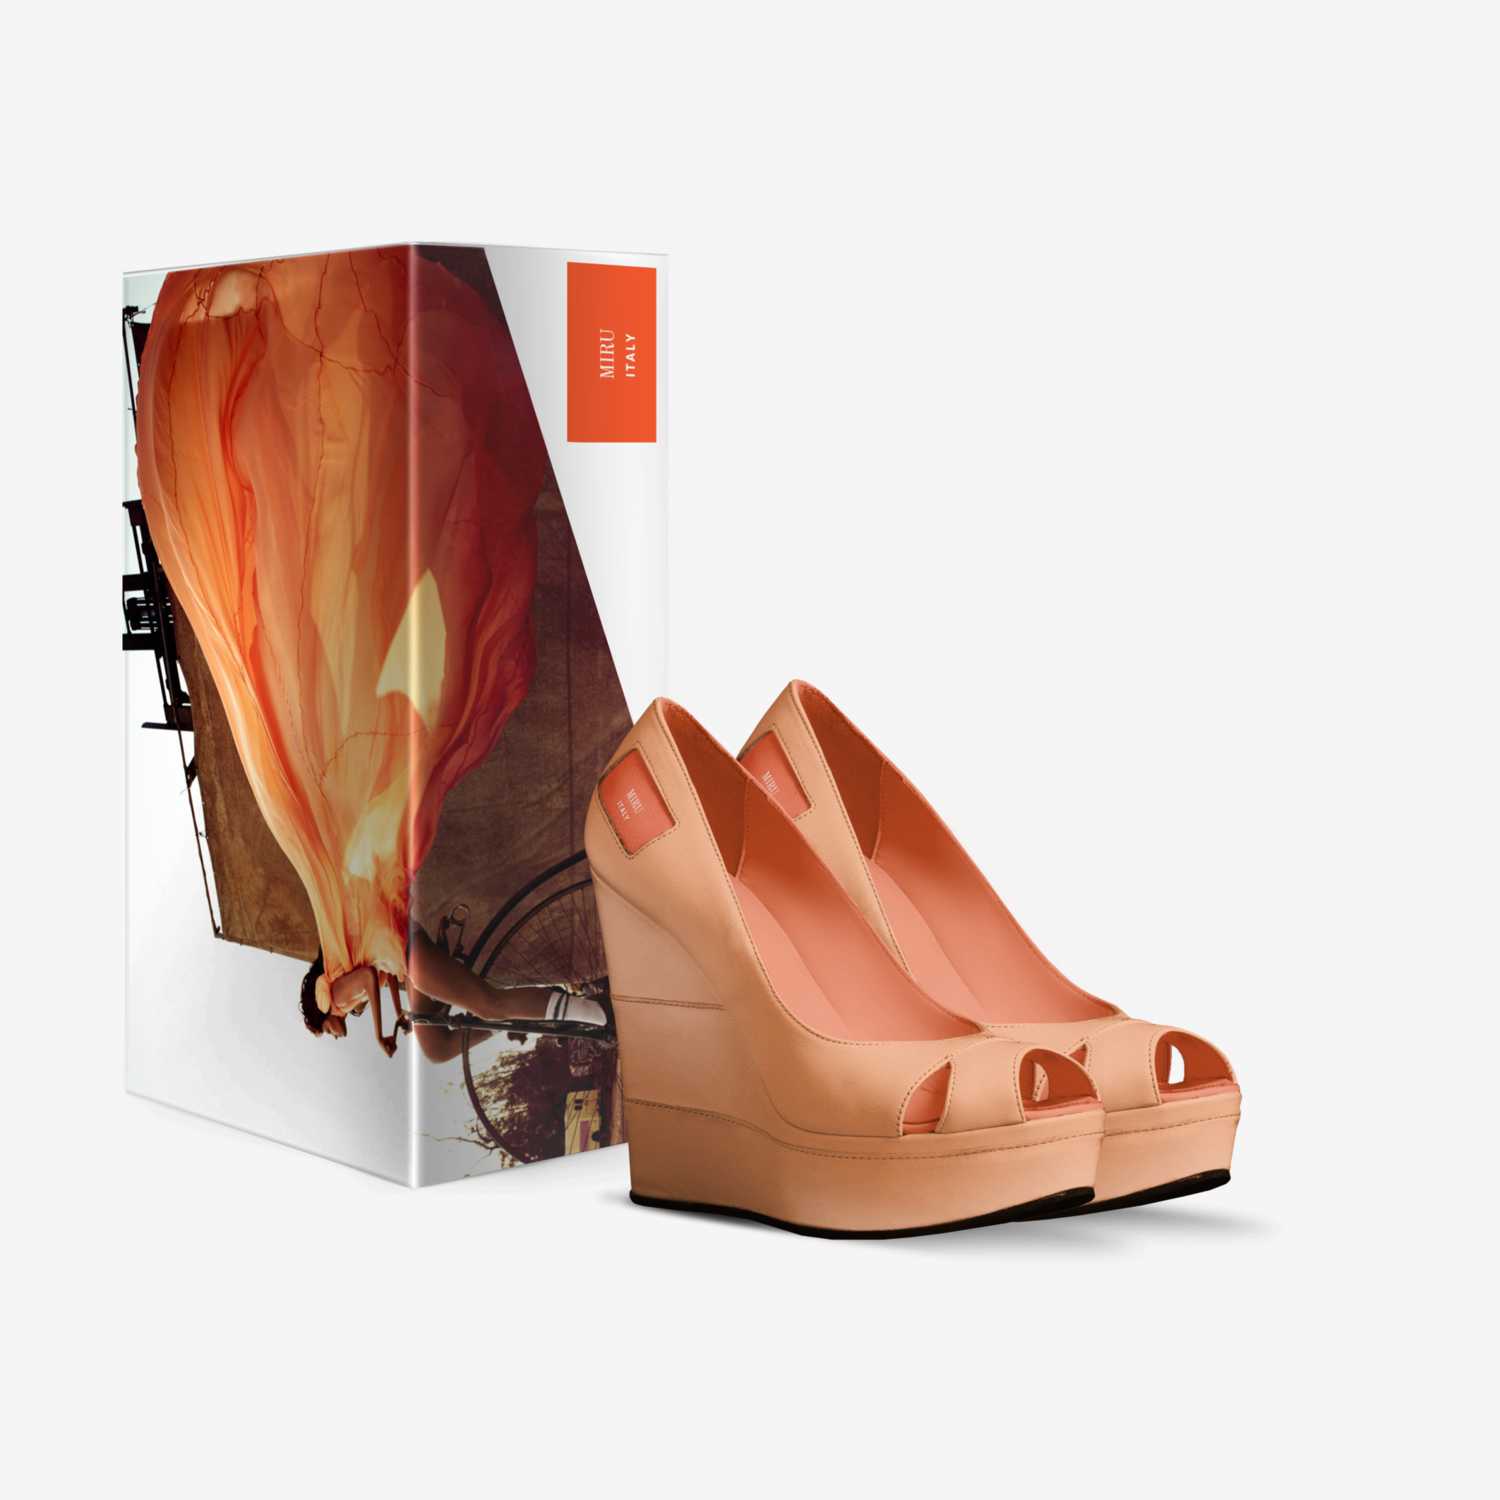 MIRU custom made in Italy shoes by Shawnkyle Thomas-brooks | Box view